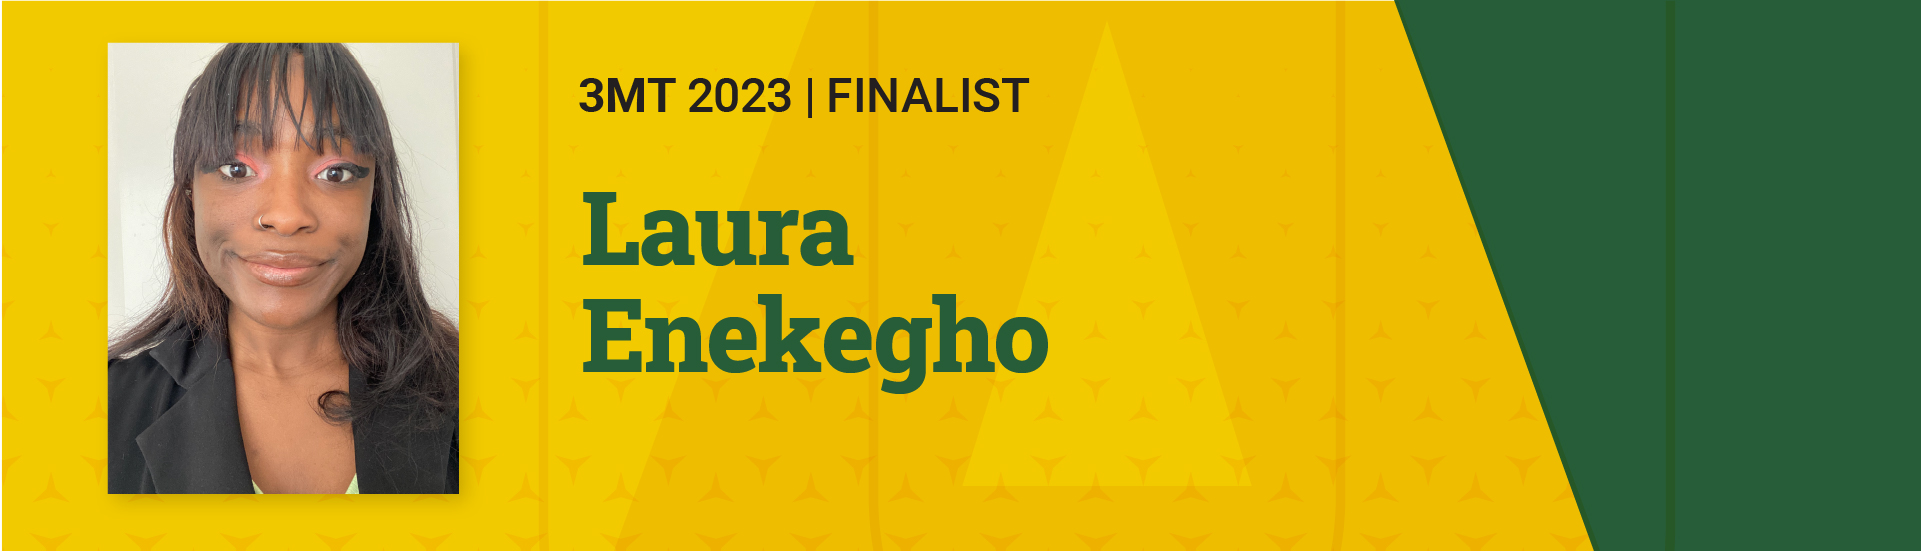 3MT 2023 Finalist  Laura Enekegho 